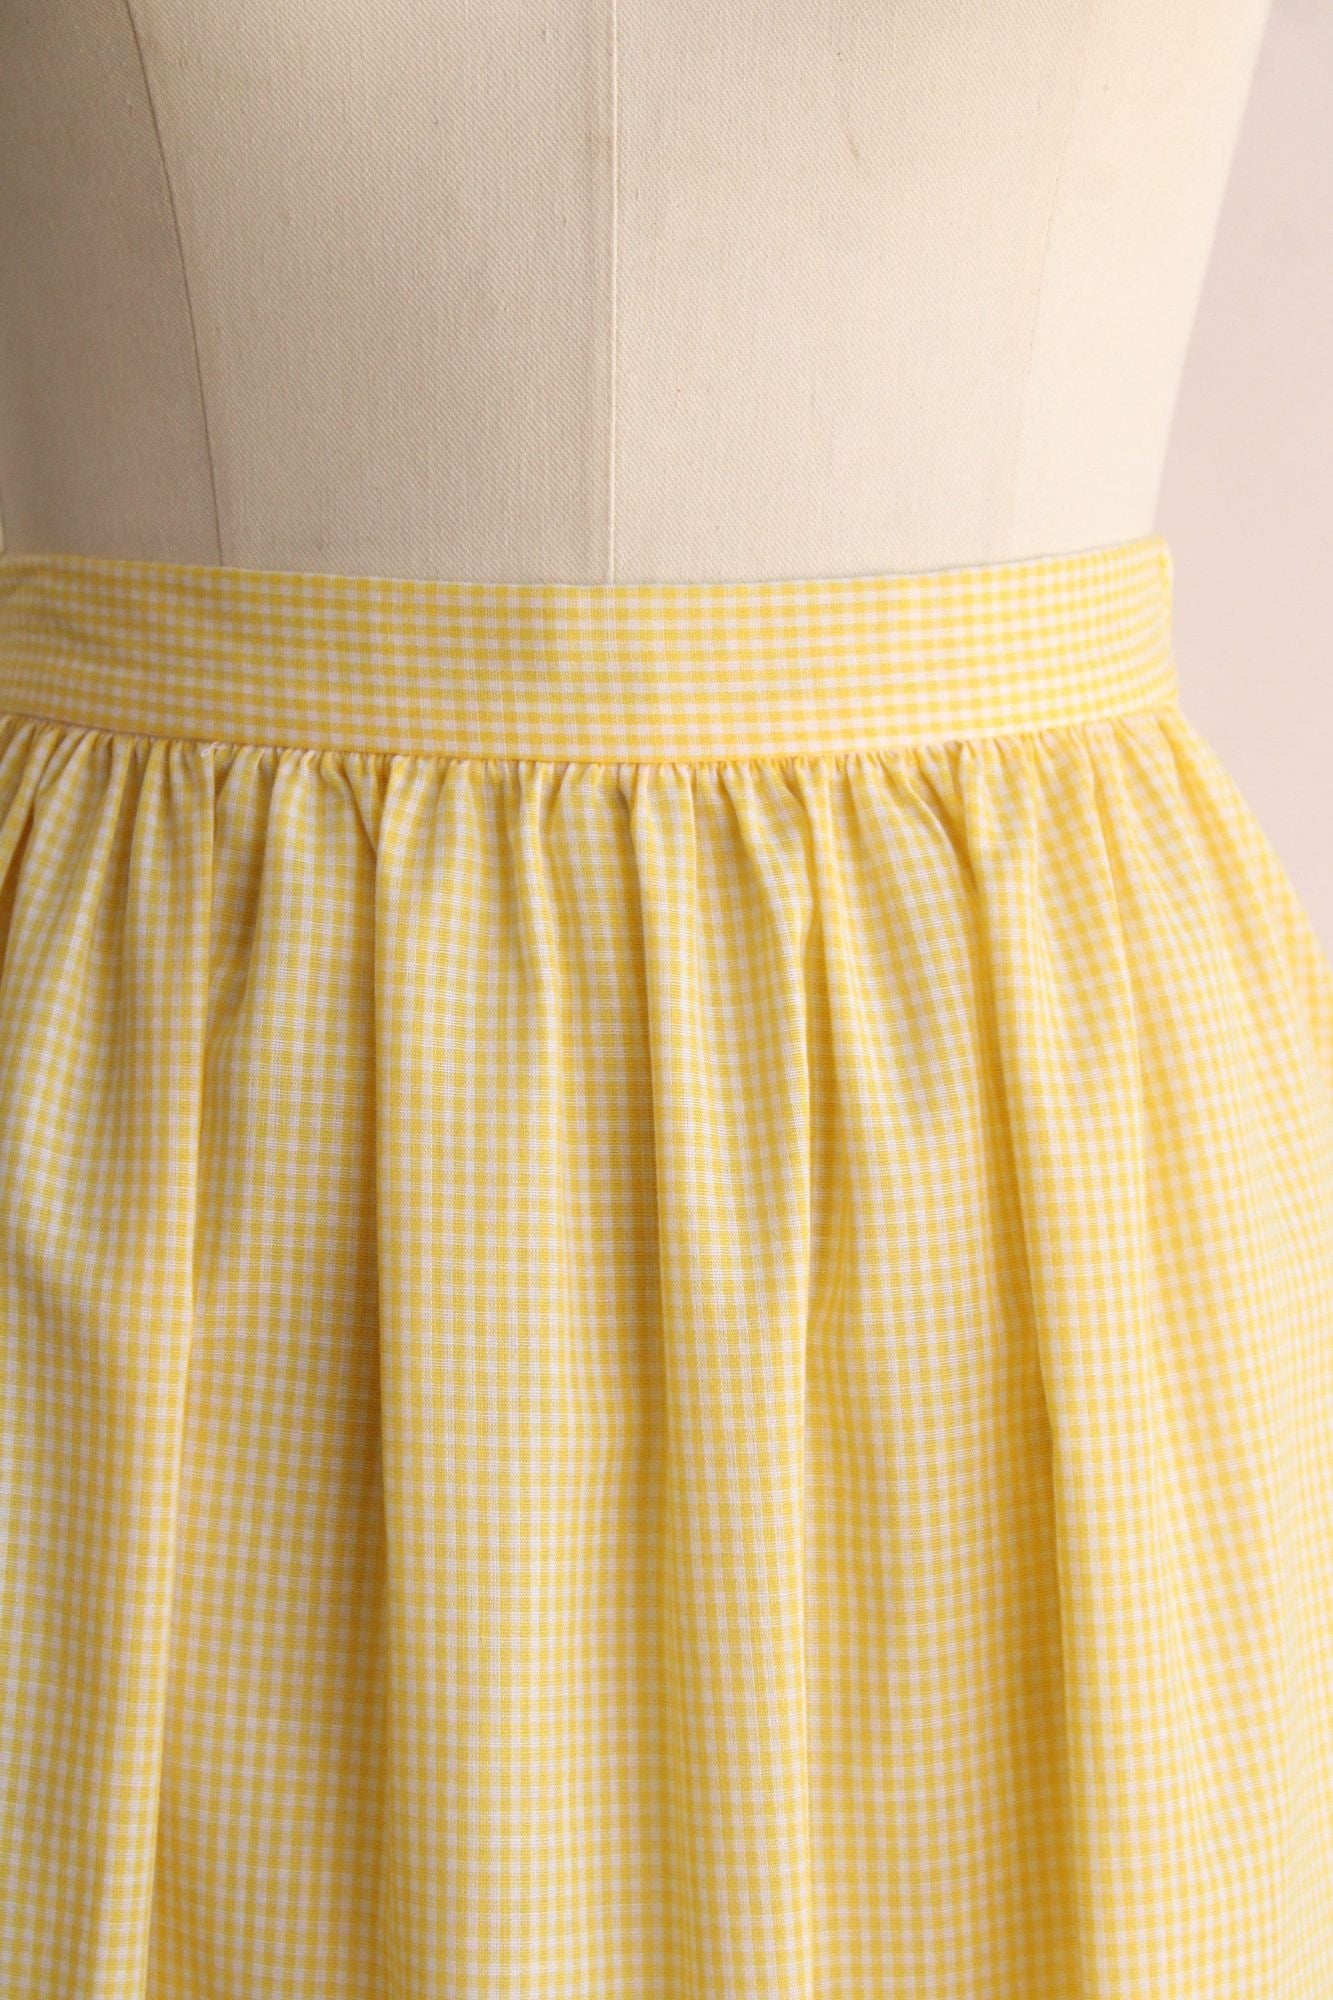 Vintage 1980s 1990s Yellow Gingham Skirt with Ruffle Hem